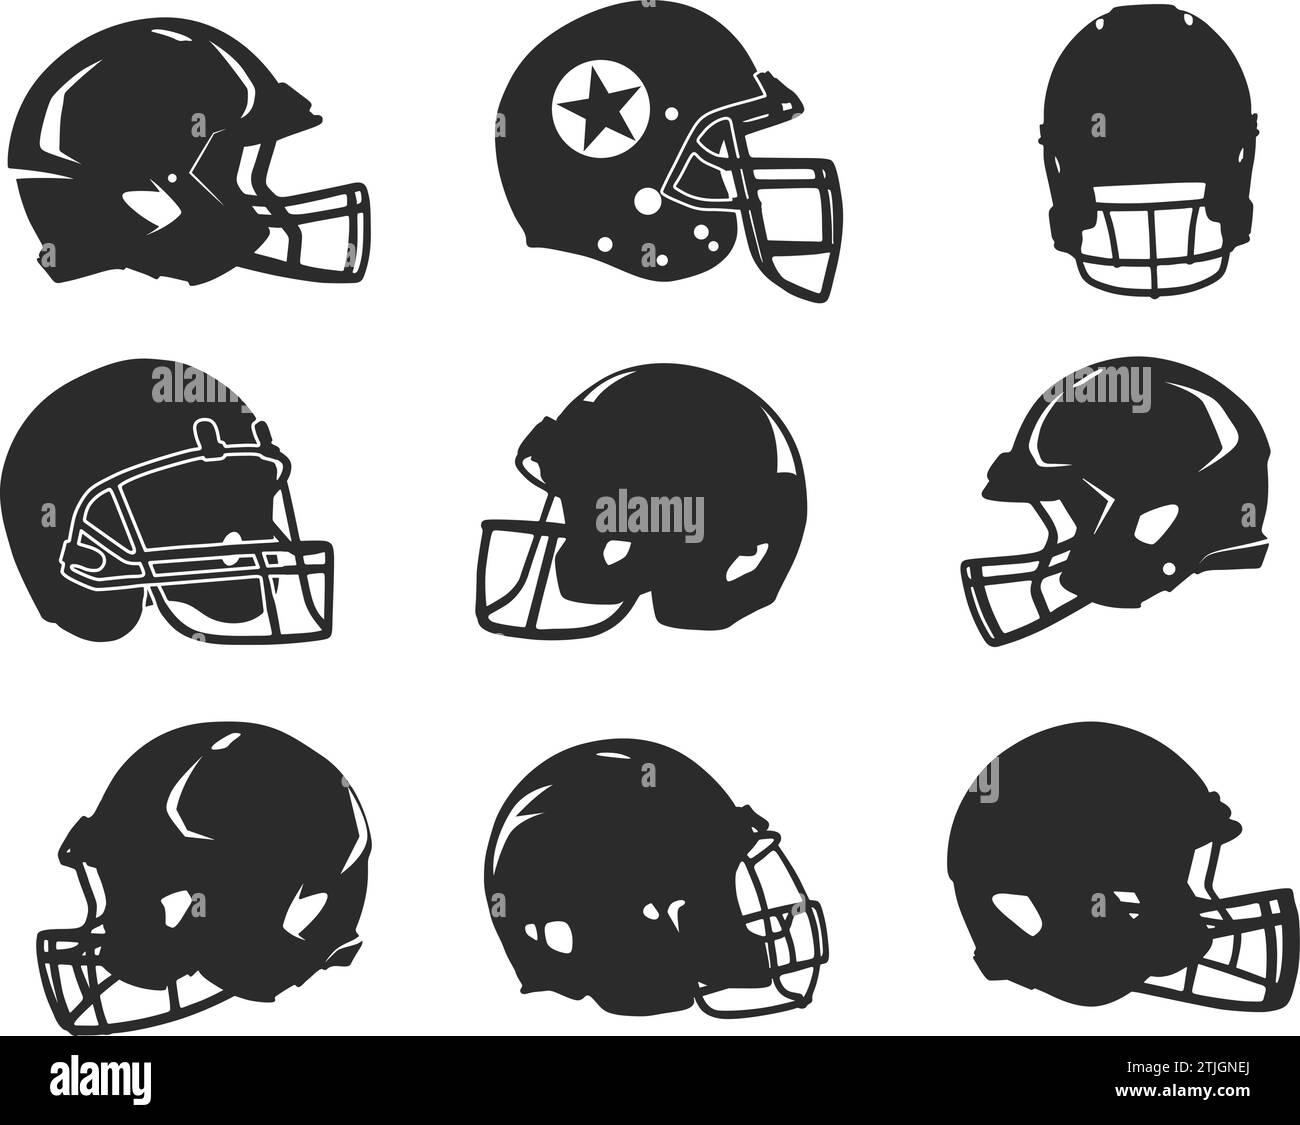 American football helmet silhouette, Helmet silhouette, Football helmet icon, Football helmet vector illustration. Stock Vector